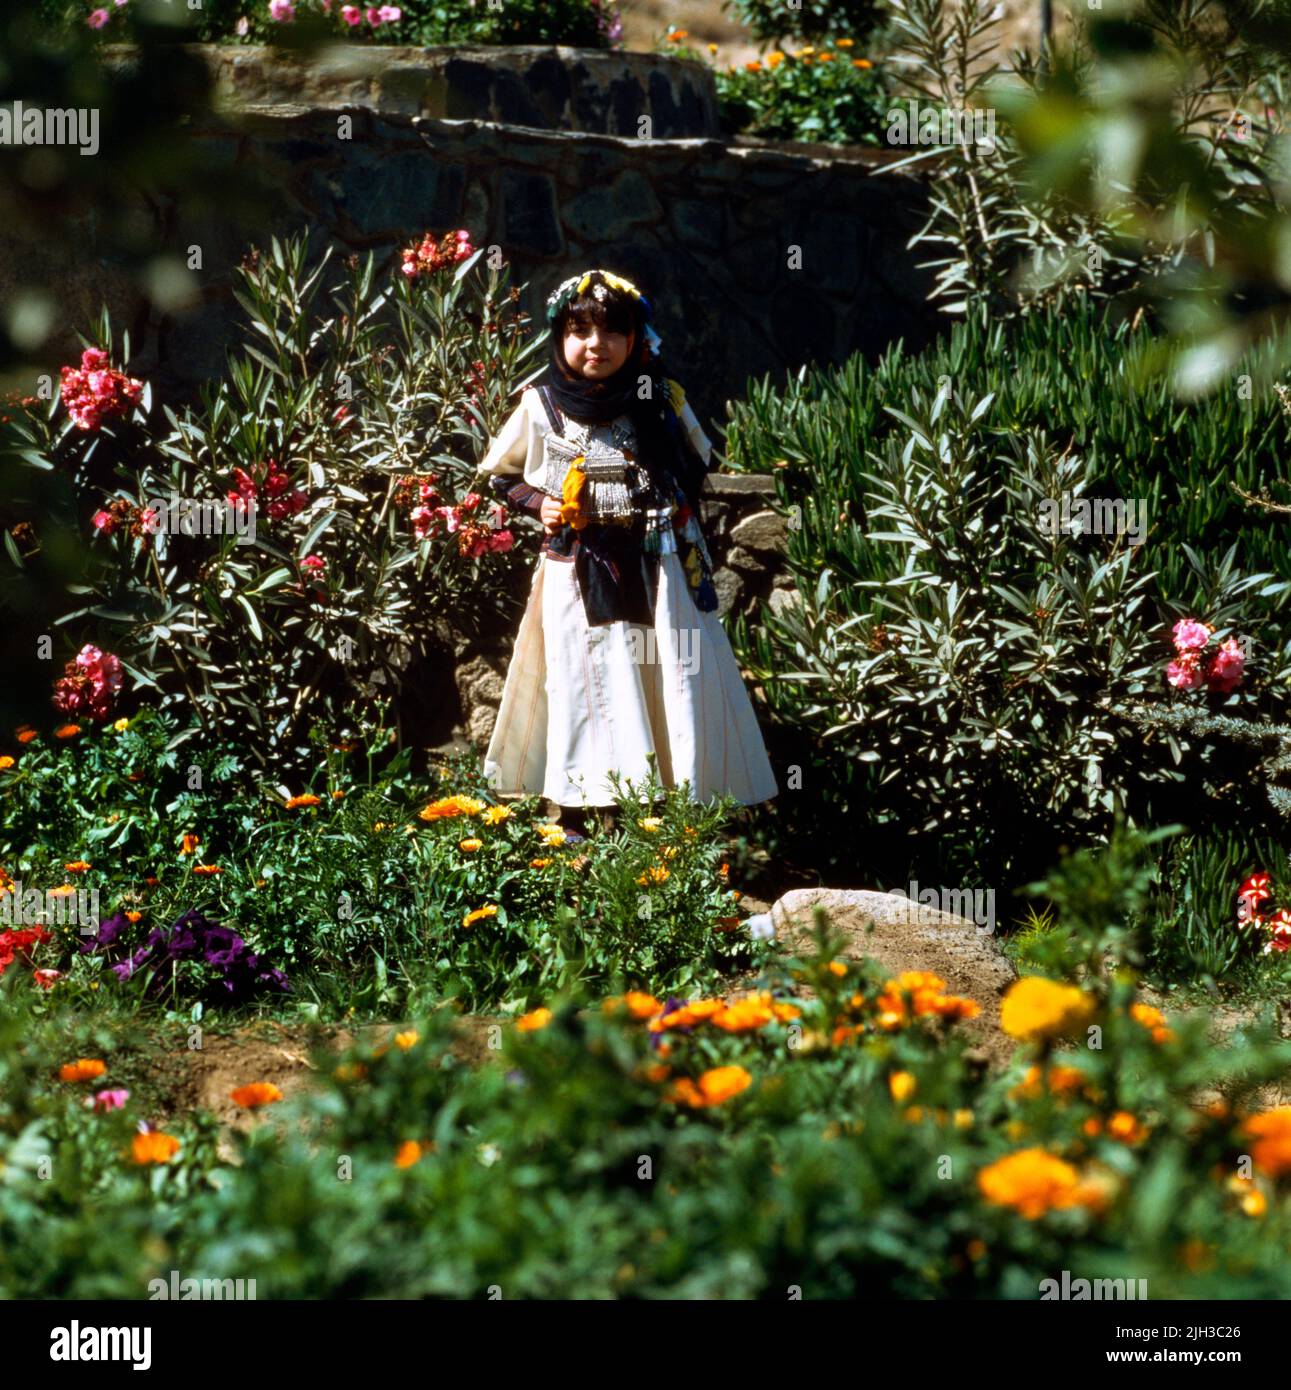 Baha Saudi Arabia Girl In Garden Wearing Traditional Clothes Stock Photo